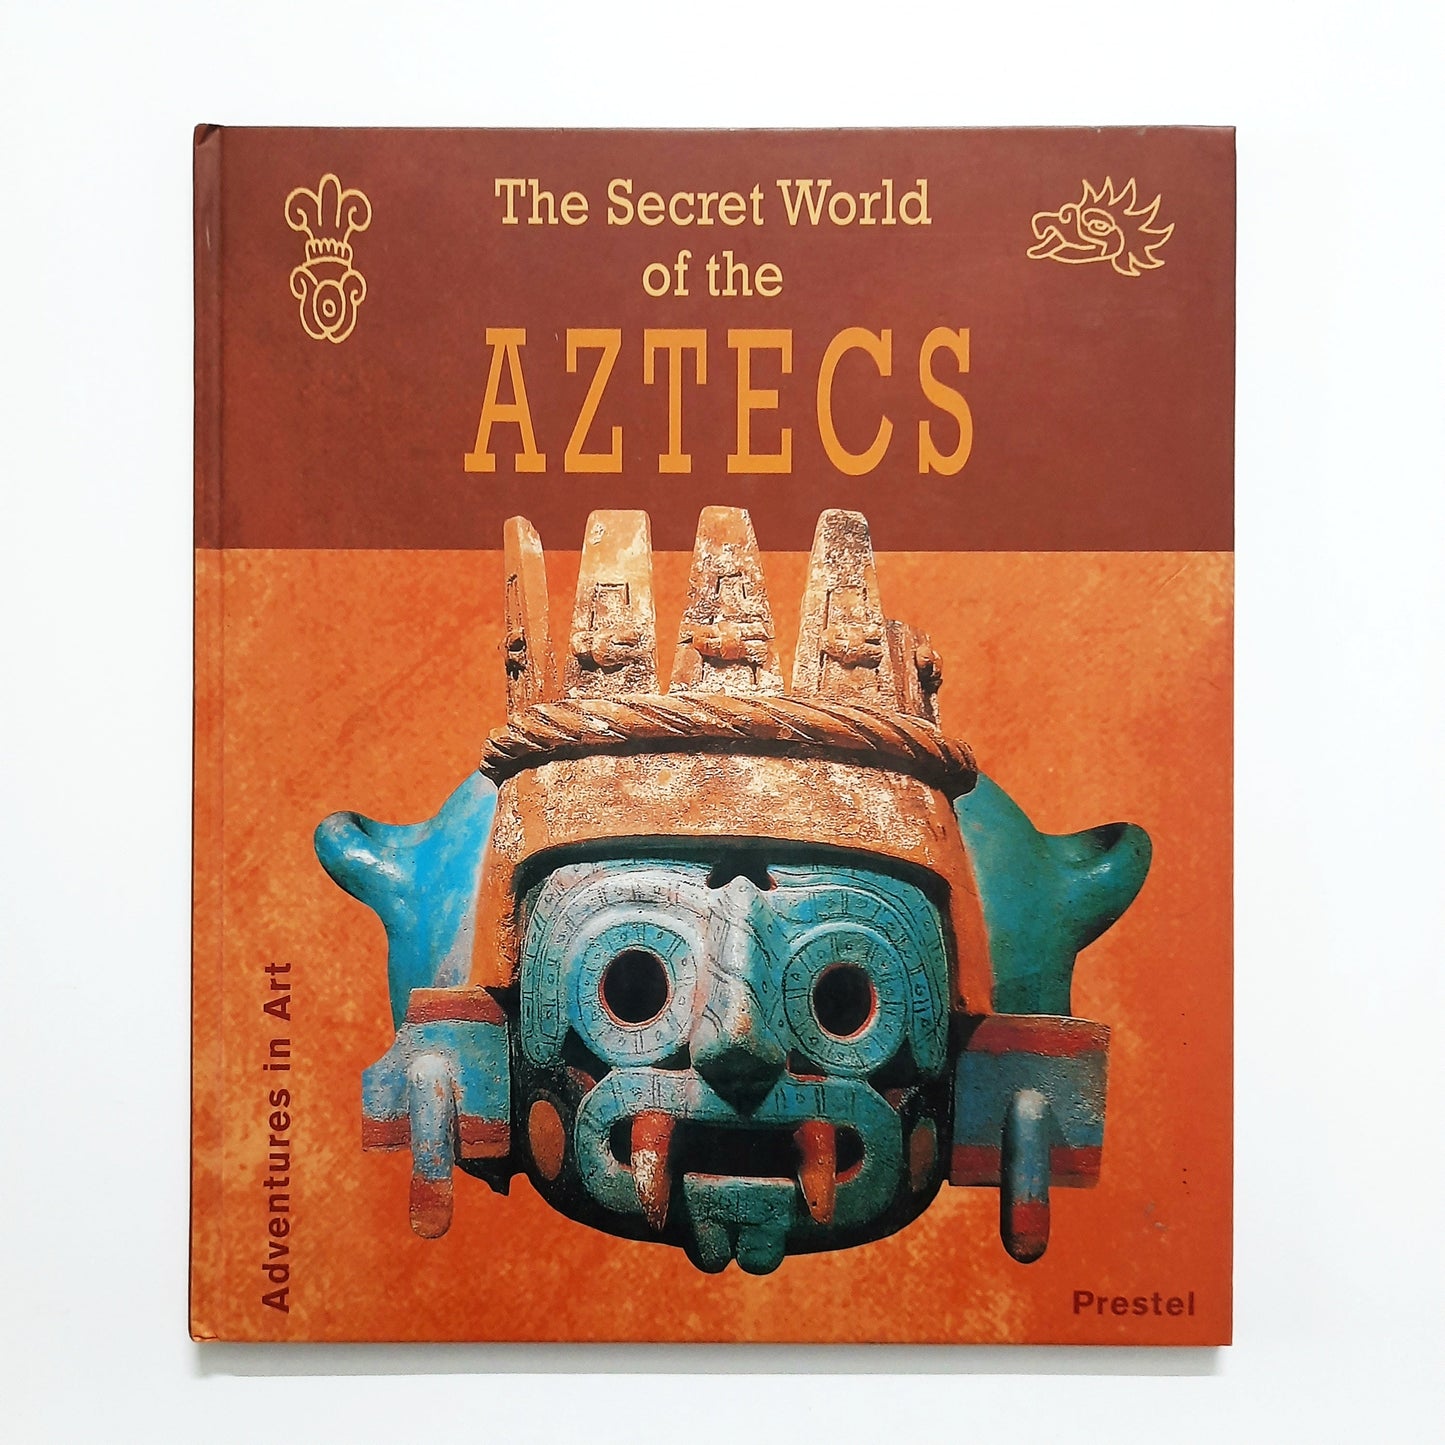 The Secret World of the Aztecs